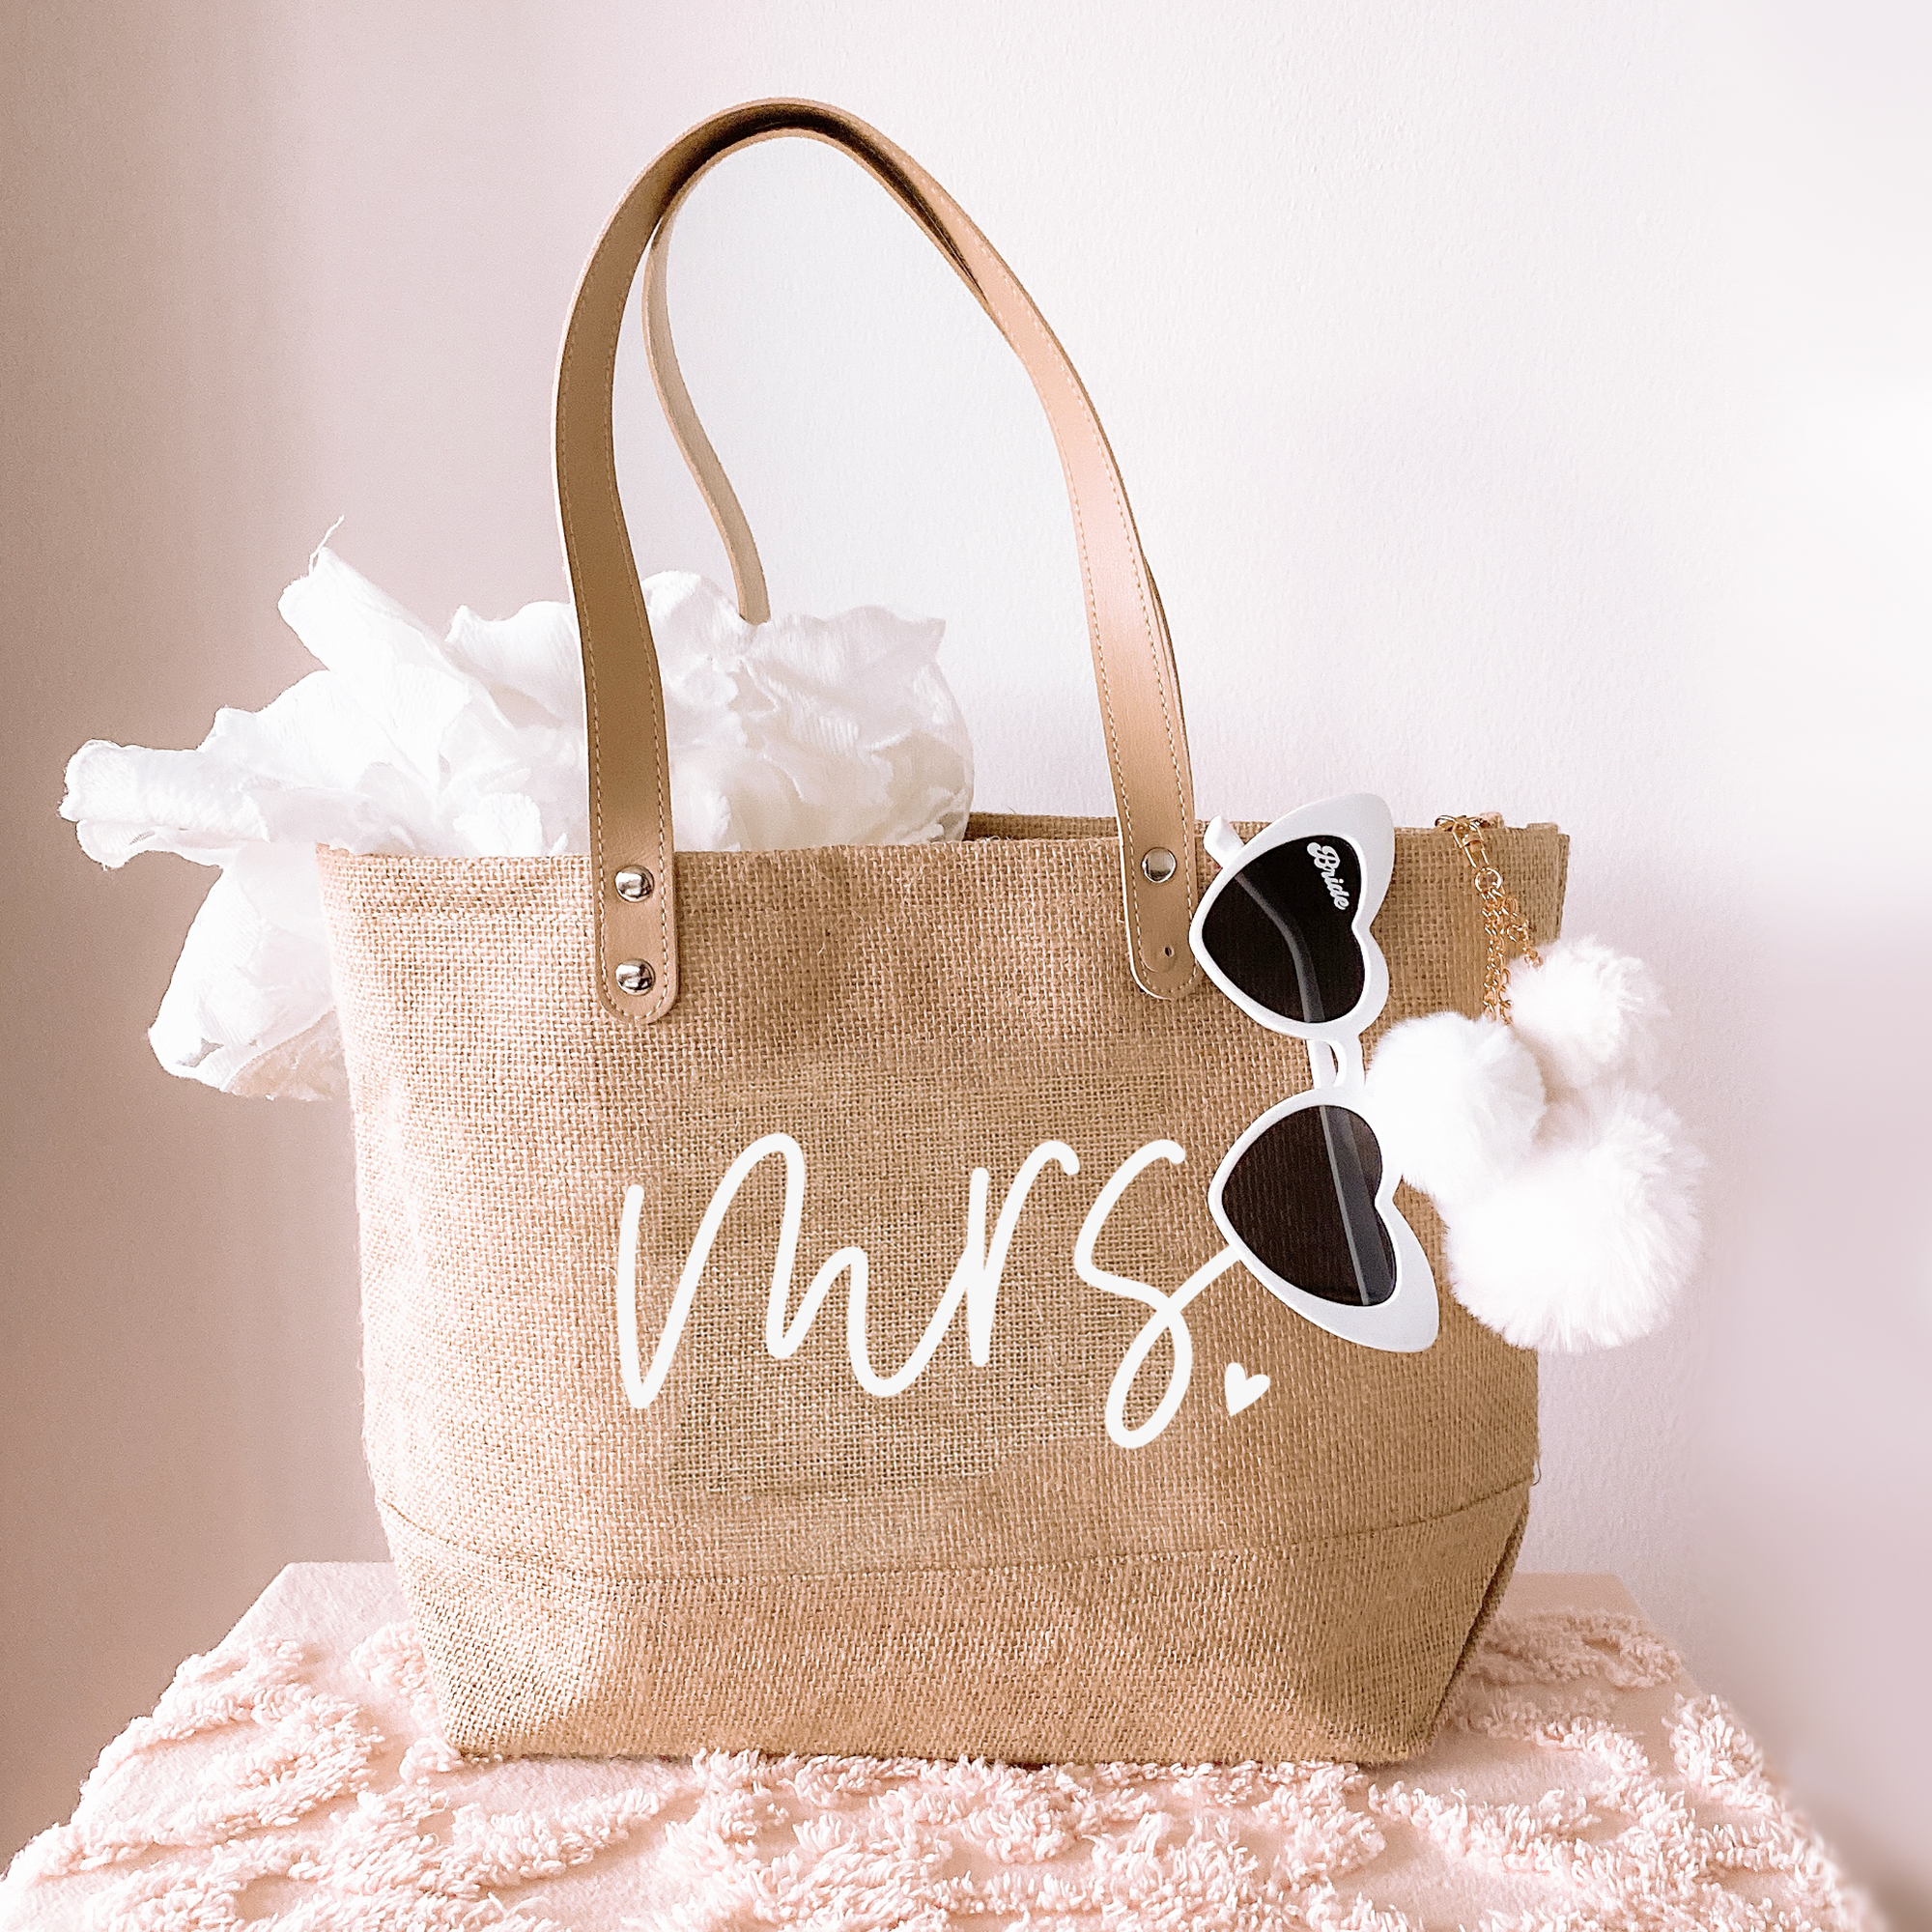 Modern Mr. & Mrs. Personalized Beach Tote Bag for Honeymoon